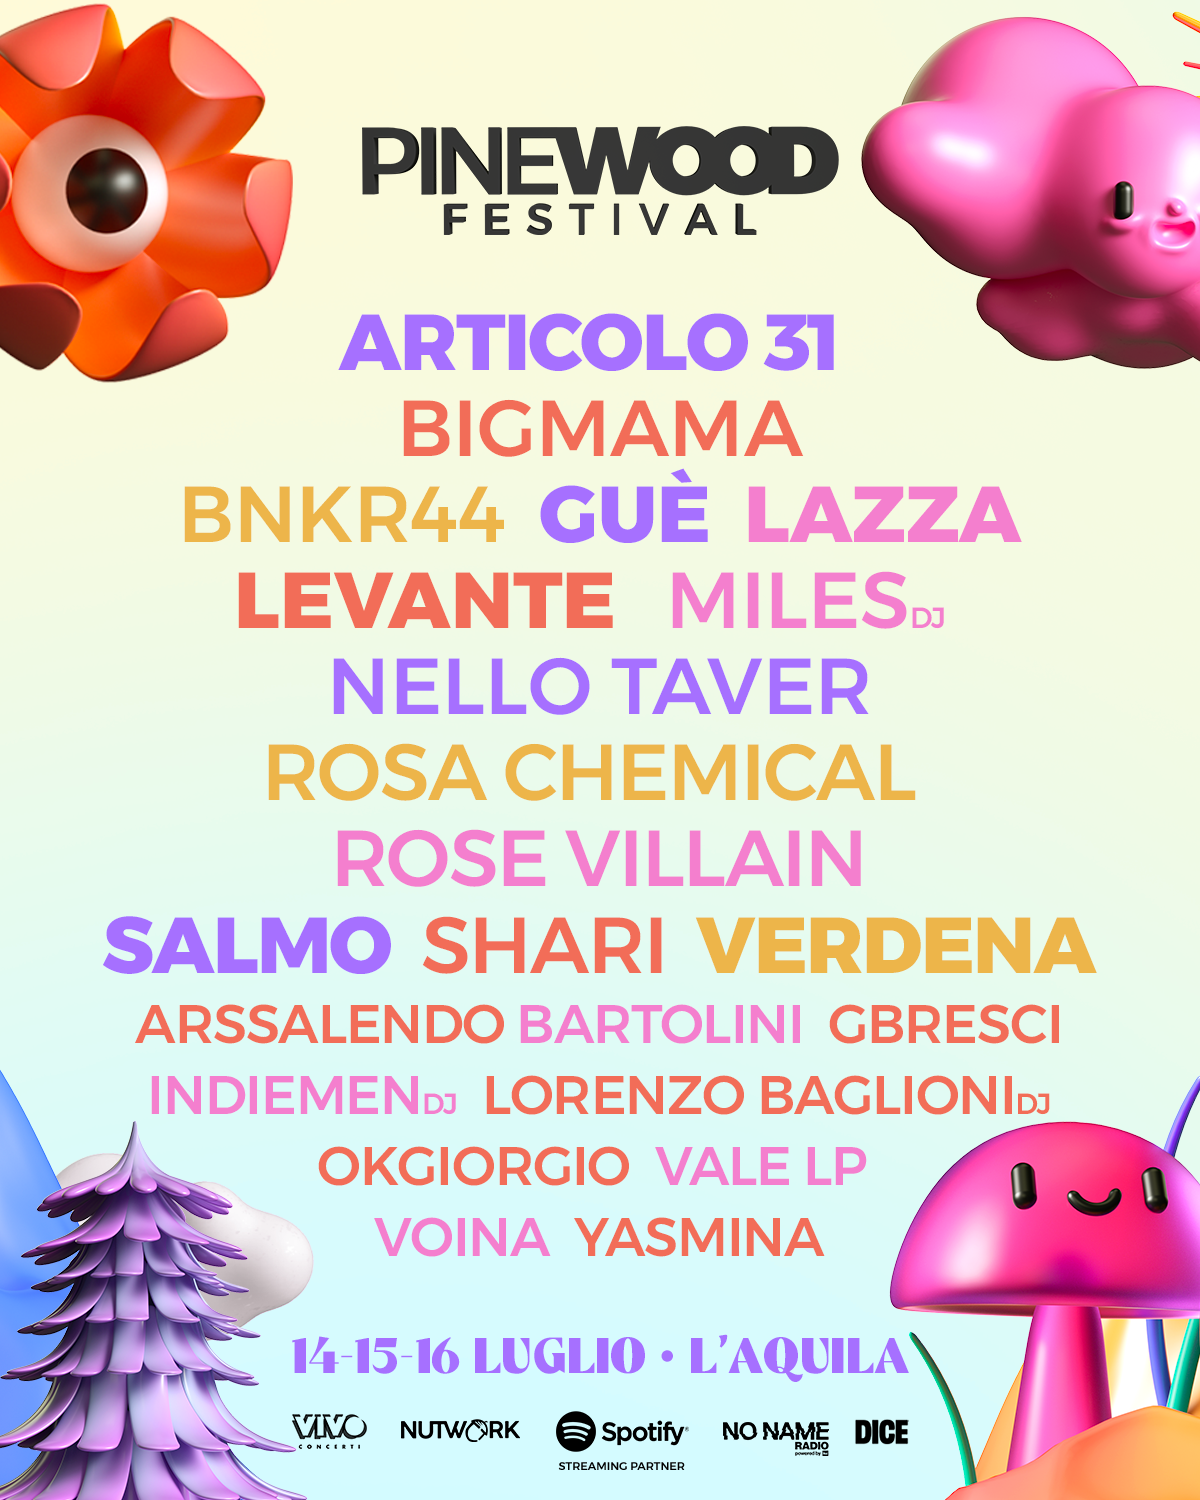 Pinewood Festival ecco la line-up completa